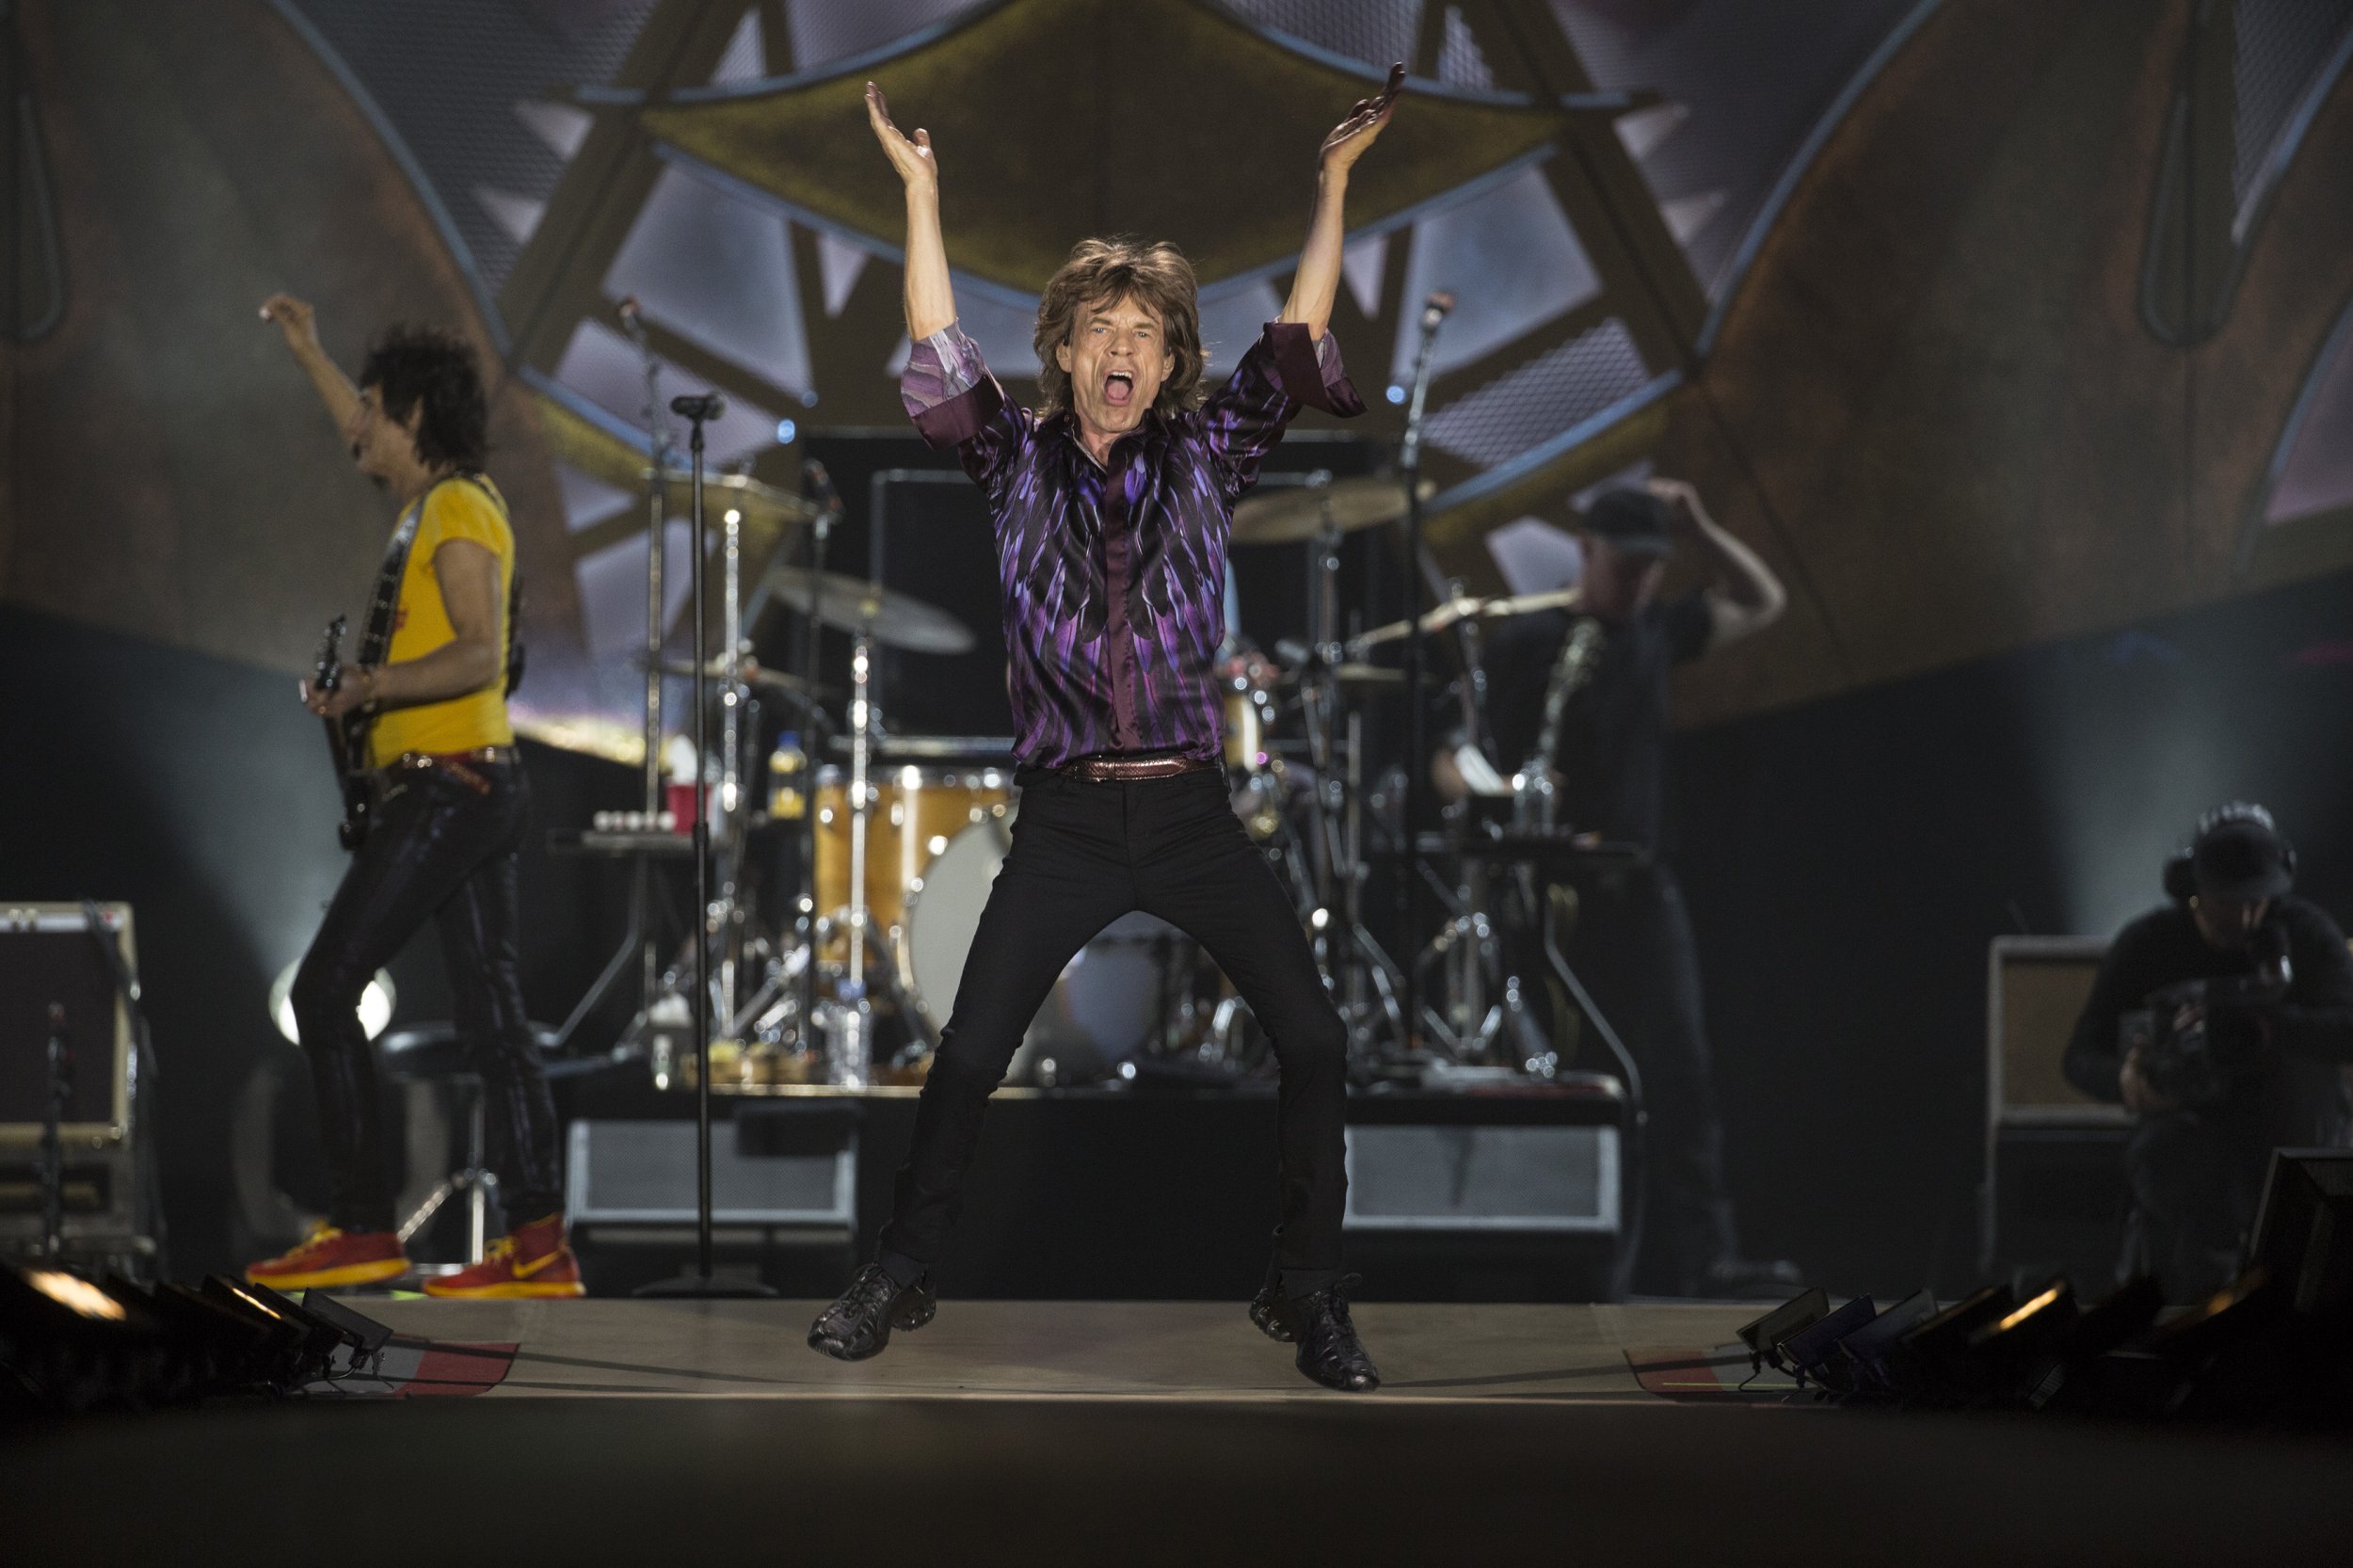 Rolling Stones Perform In Israel Depsite Criticism, Highlighting